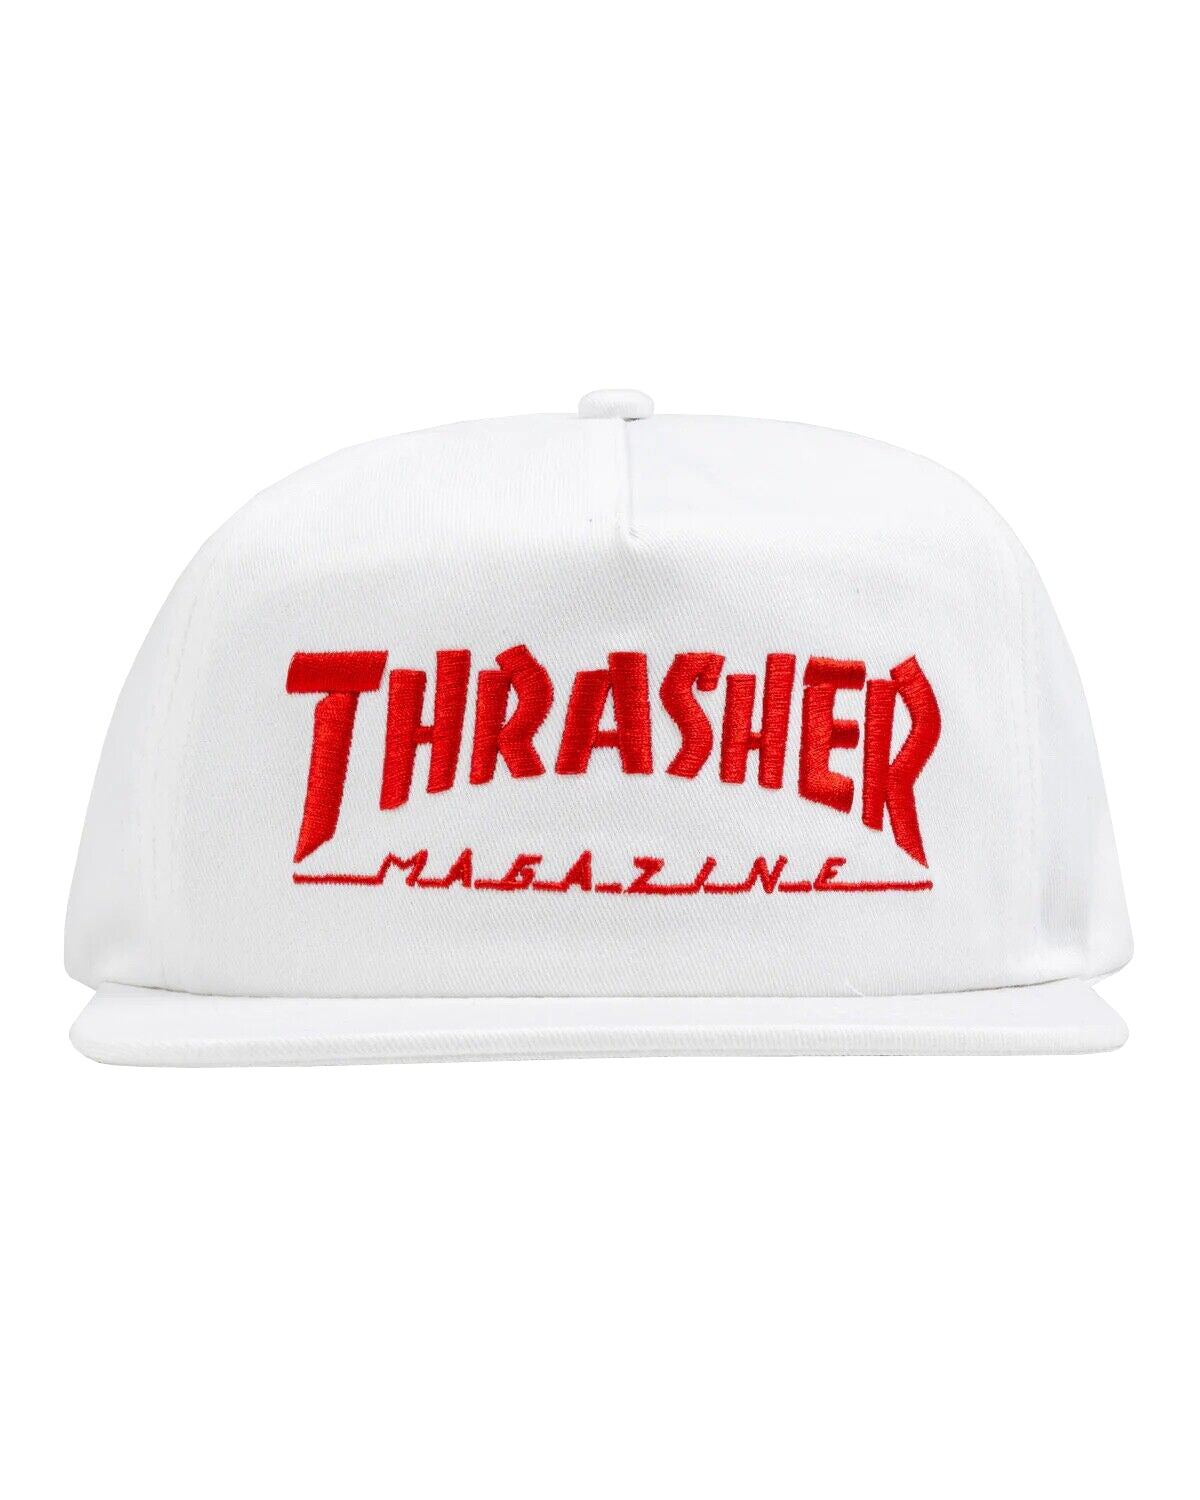 Thrasher Mag Logo Snapback Hat White/Red OS